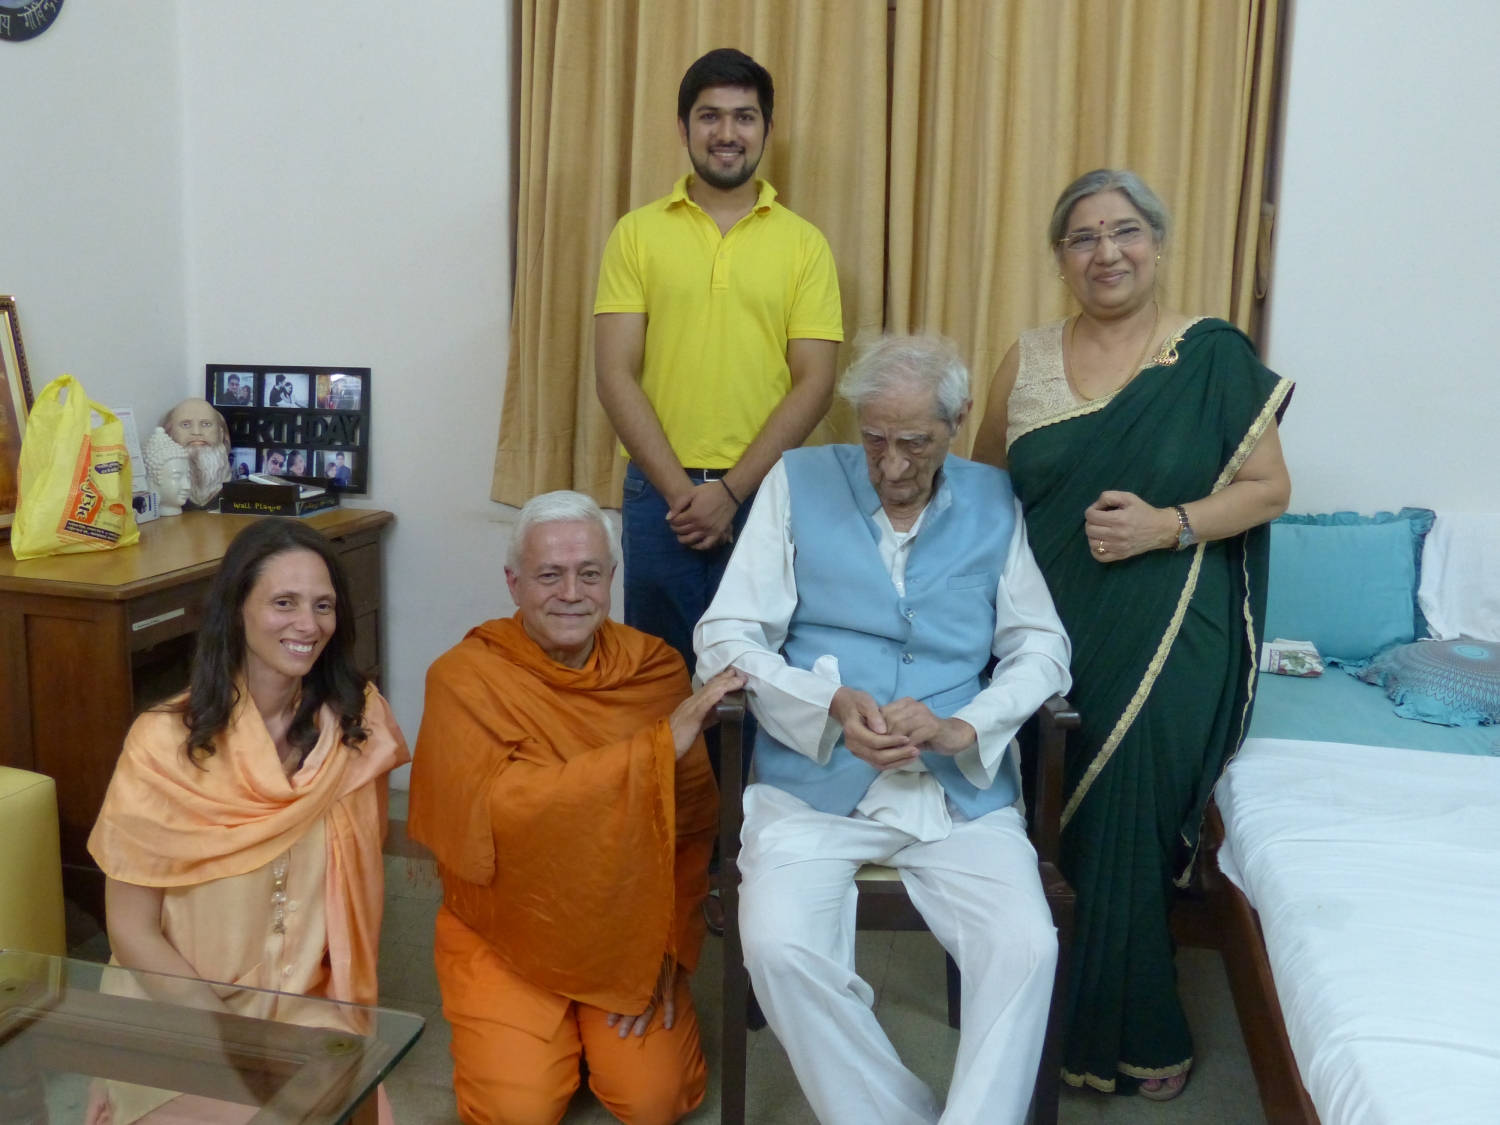 Encuentro de H.H. Jagat Guru Amrta Sūryānanda Mahā Rāja con Dr. Jayadeva Yogendra - The Yoga Institute of Santa Cruz, Mumbai, India - 2016, enero